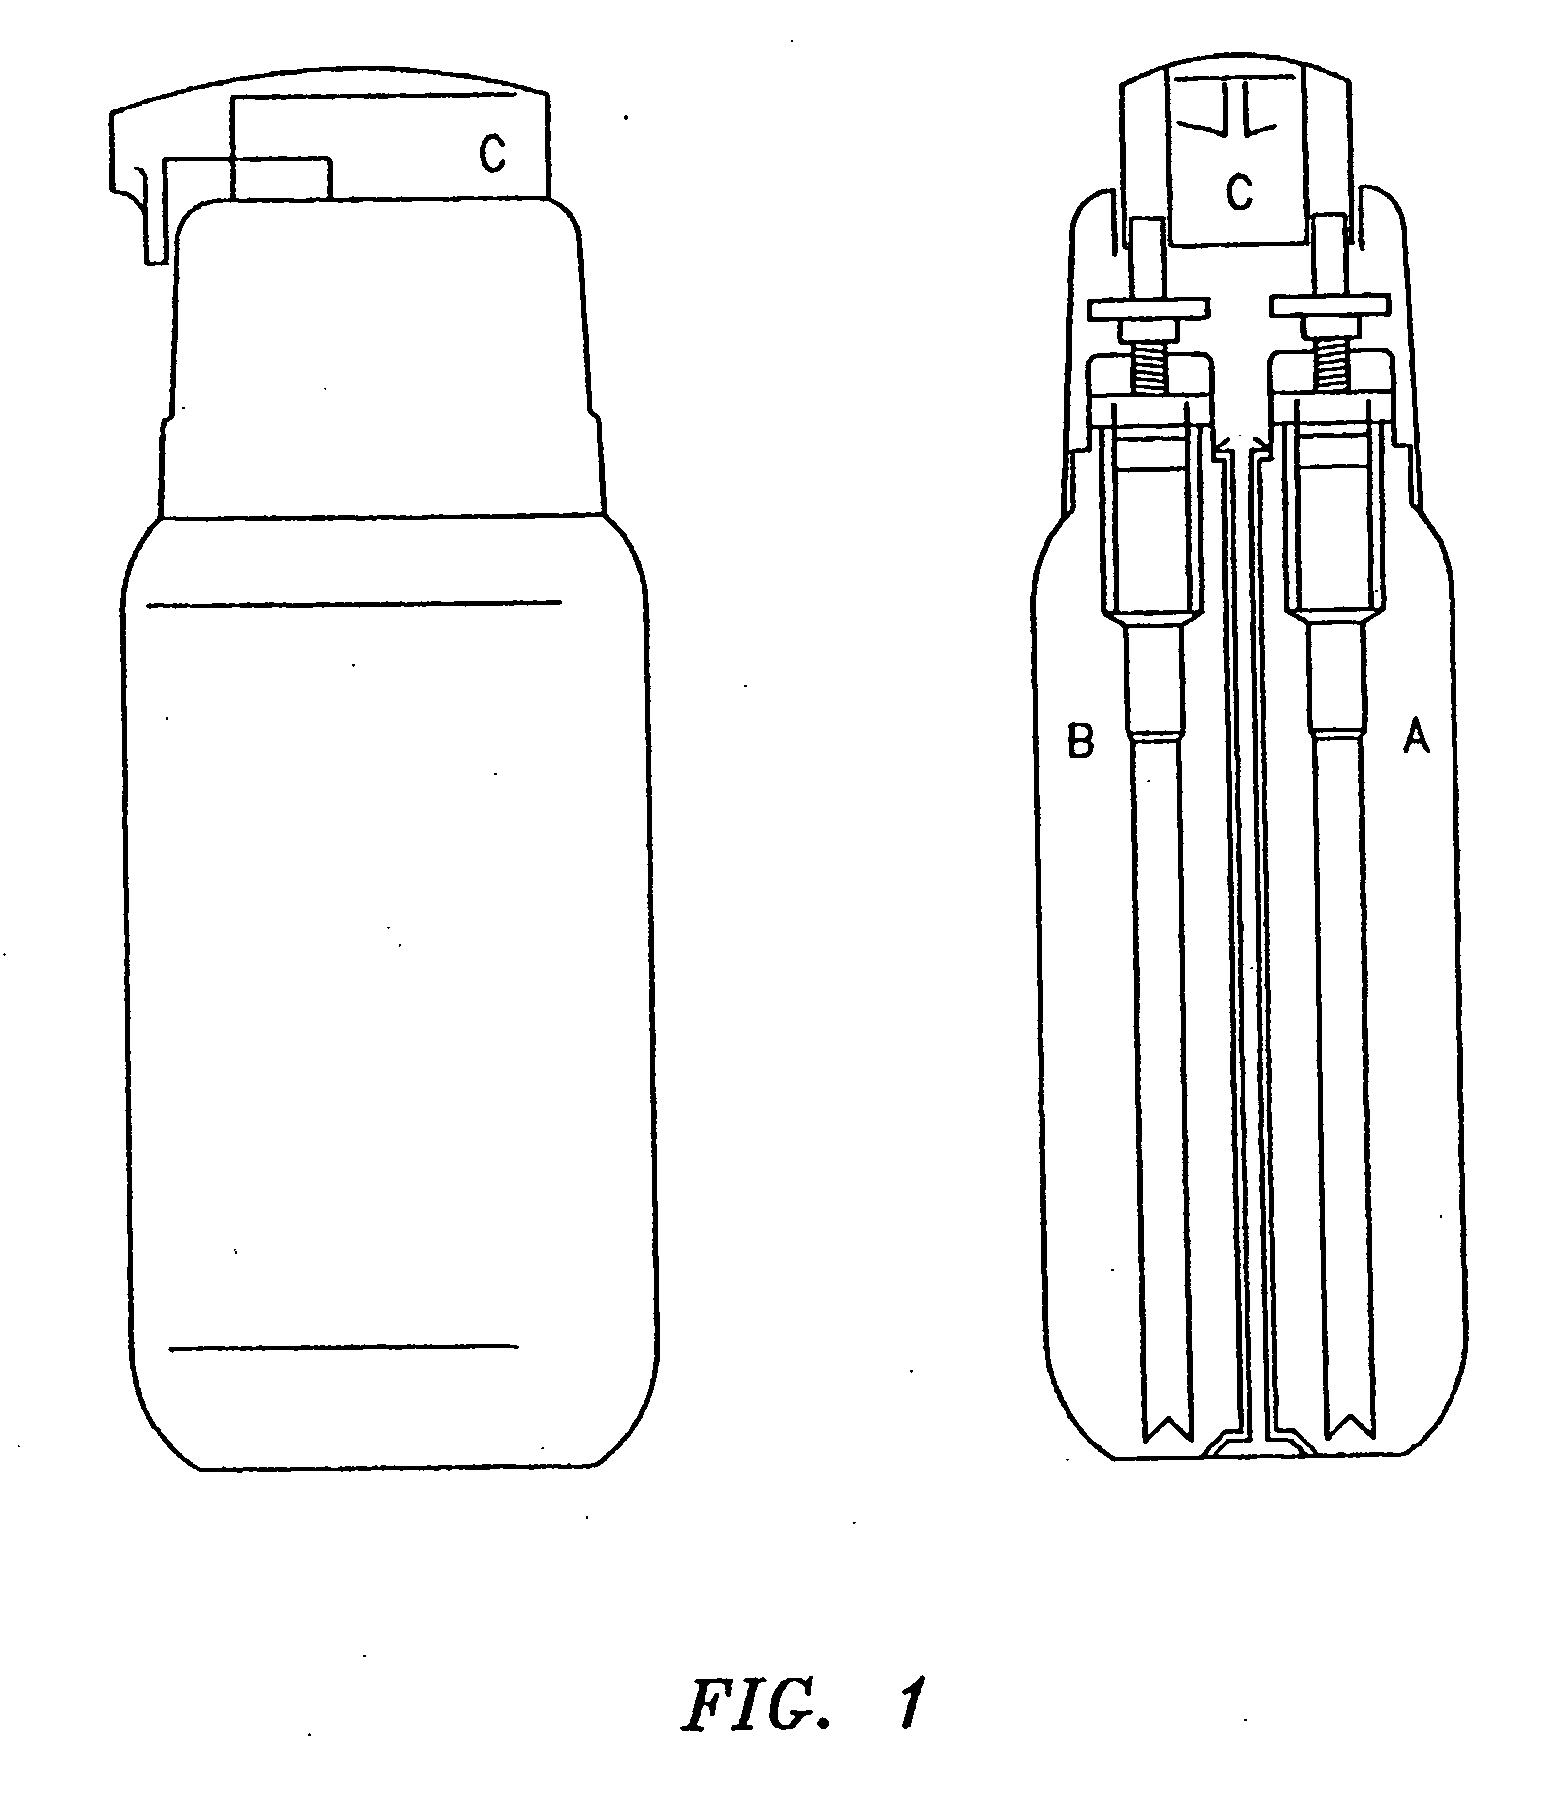 Antibiotic/benzoyl peroxide dispenser